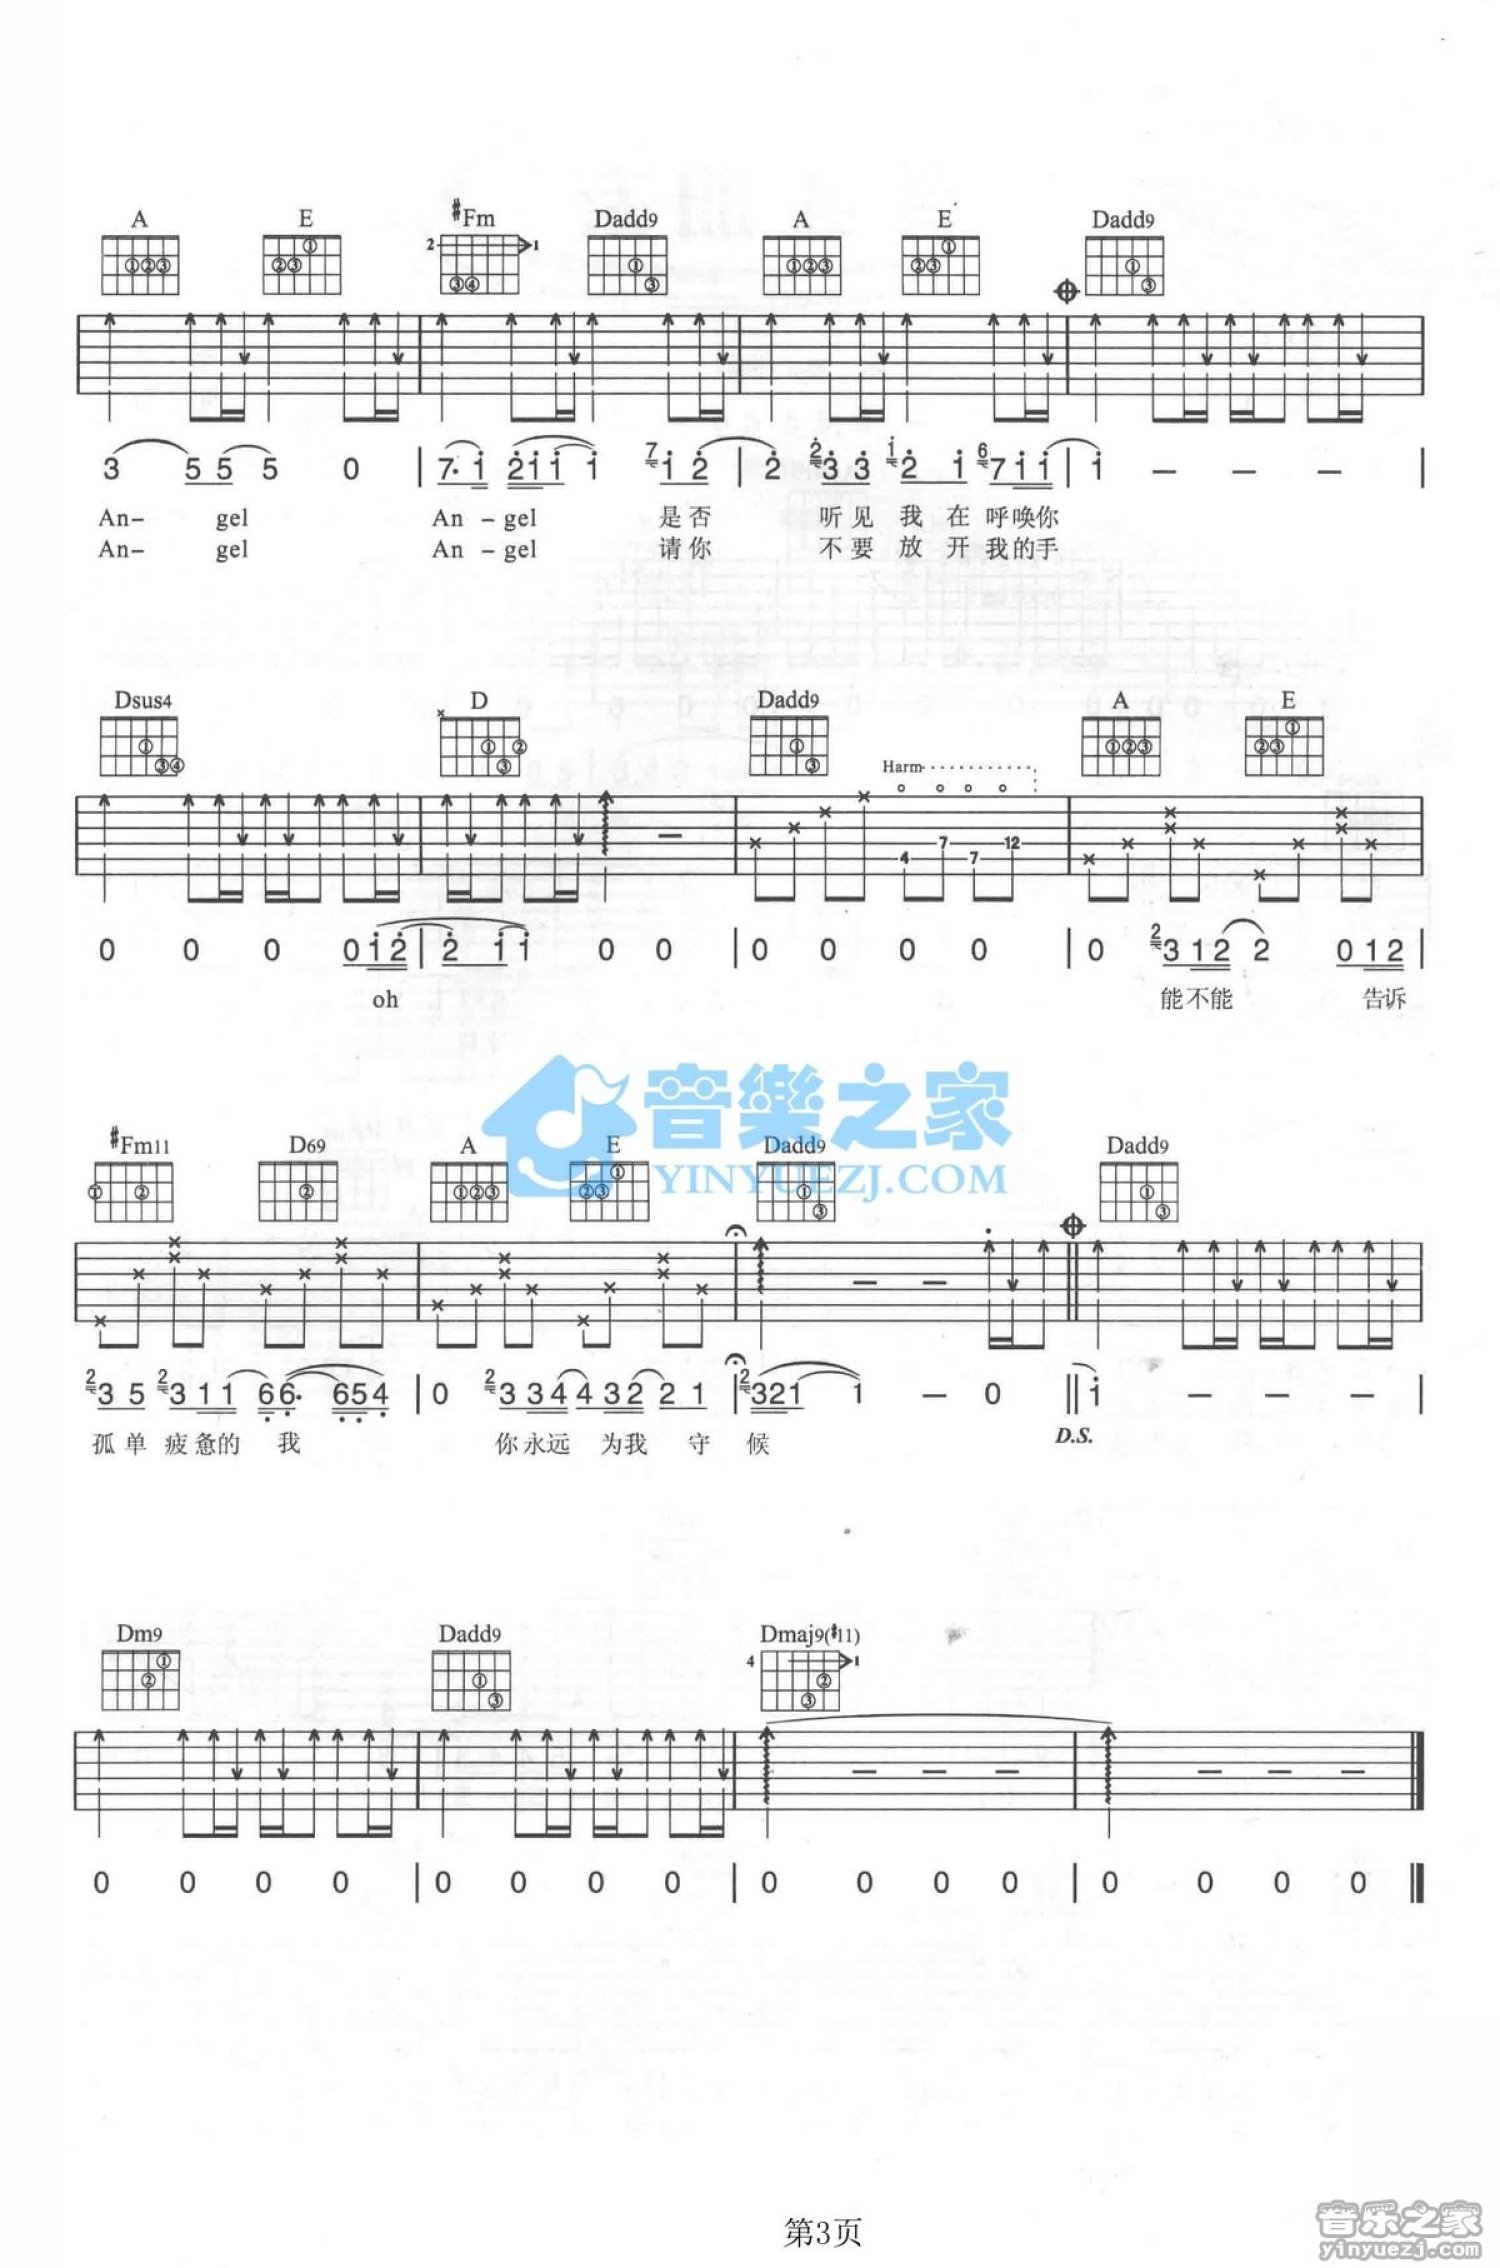 Angel吉他谱 - 张杰 - D调吉他弹唱谱 - 琴谱网